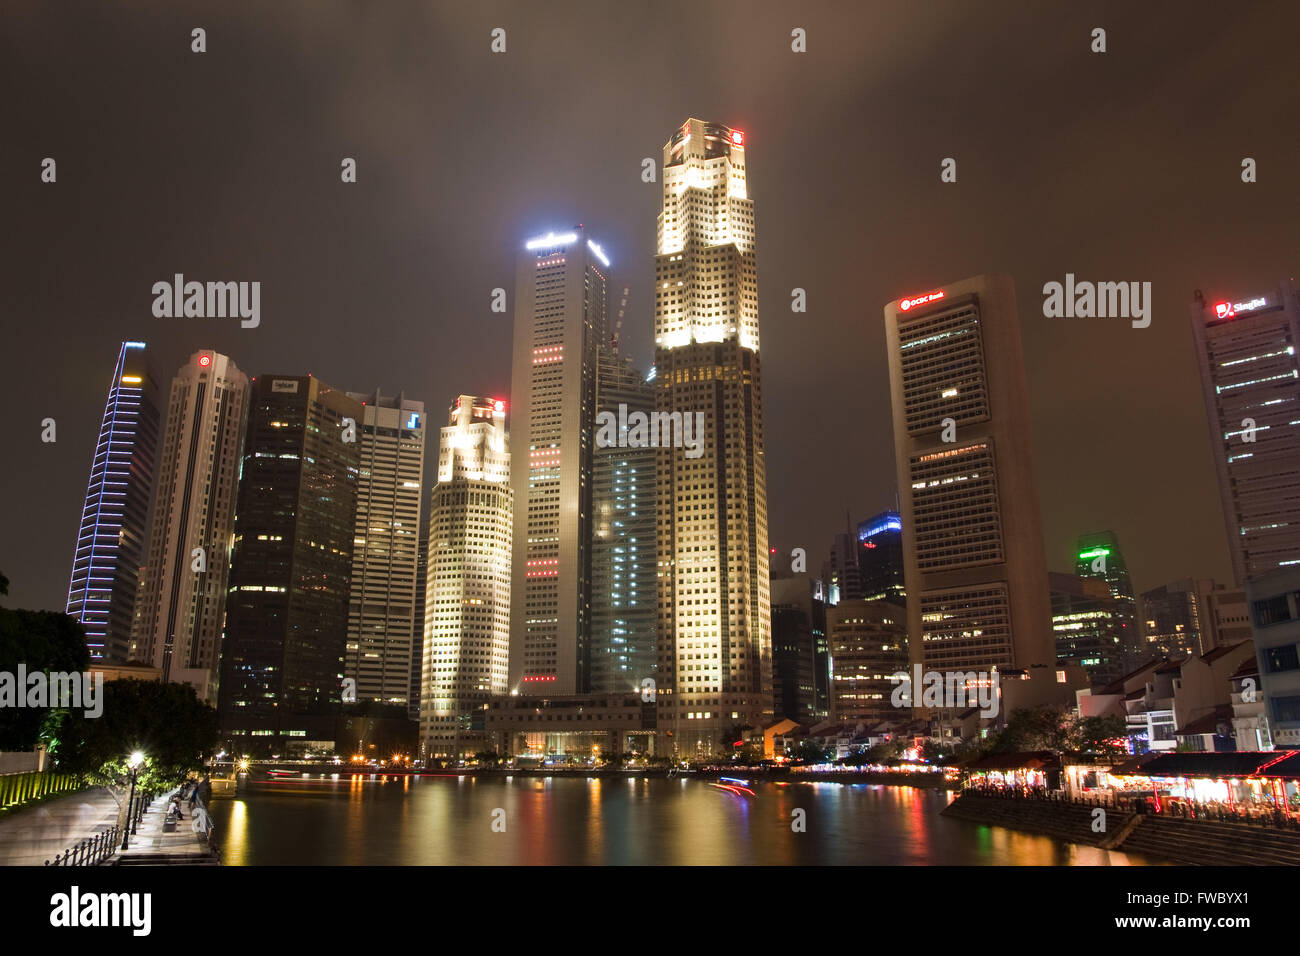 The skyline of Singapore by night Stock Photo